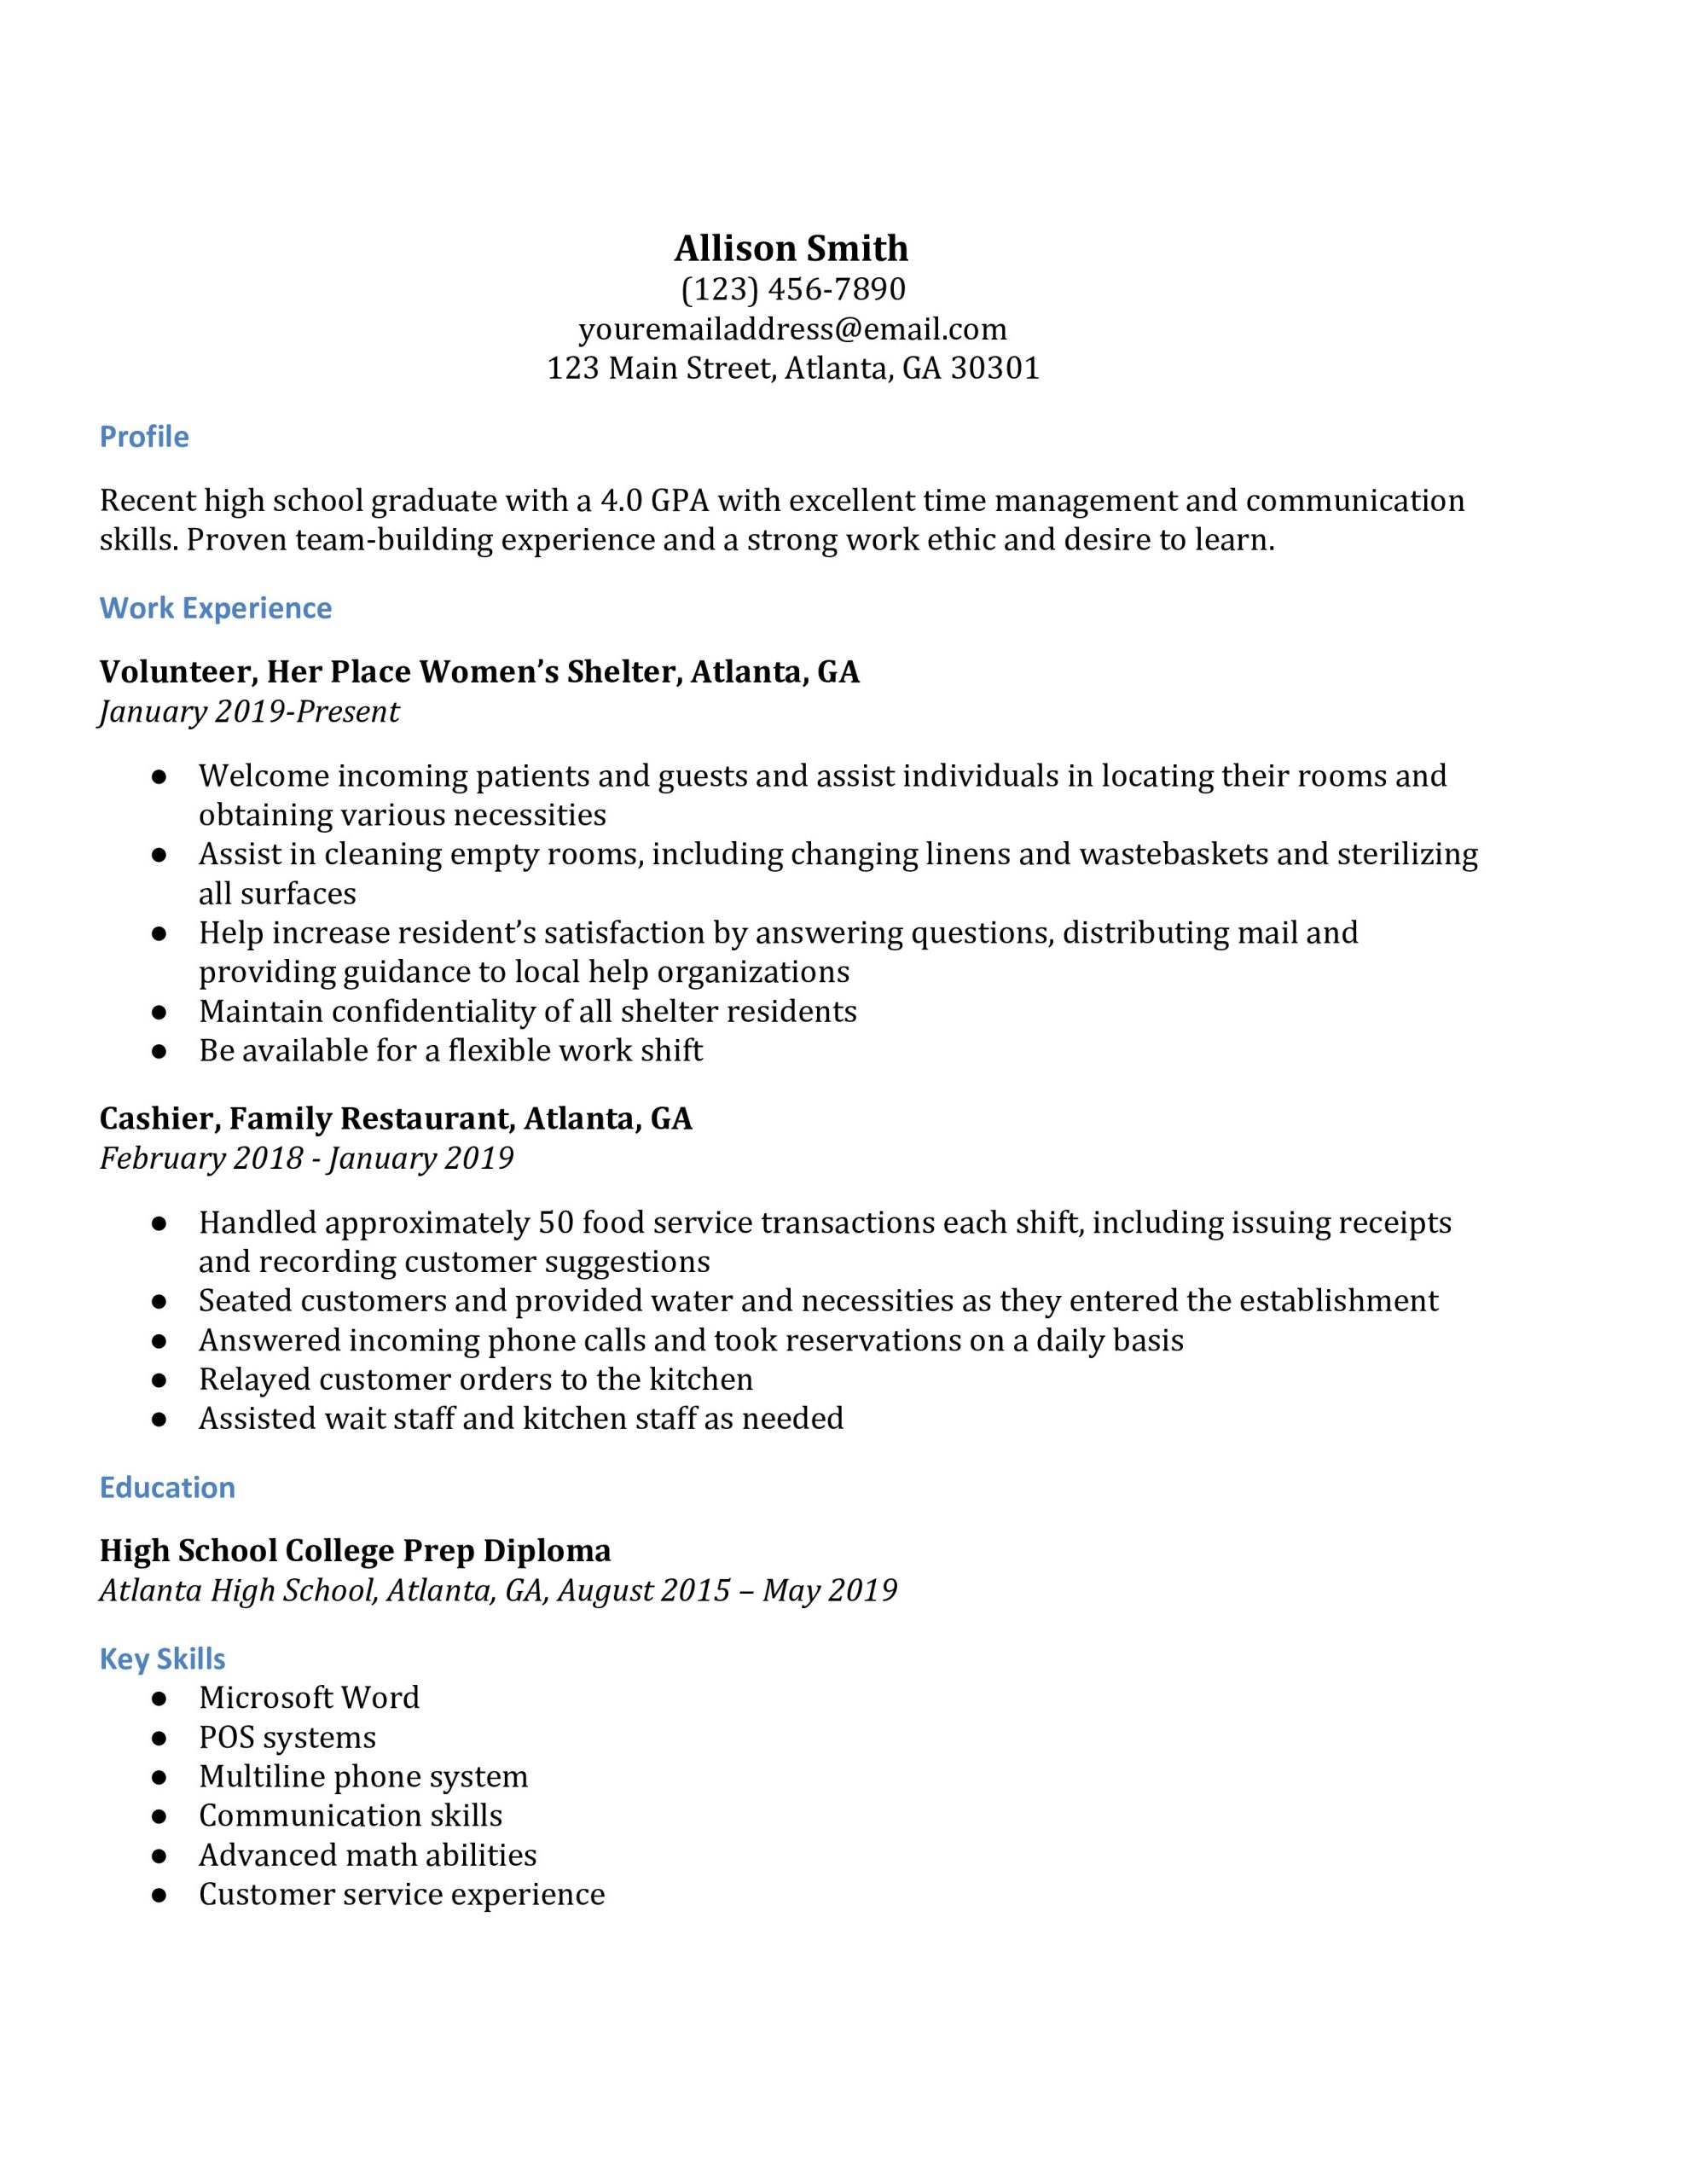 Sample Resume for High School Senior High School Resume Examples – Resumebuilder.com